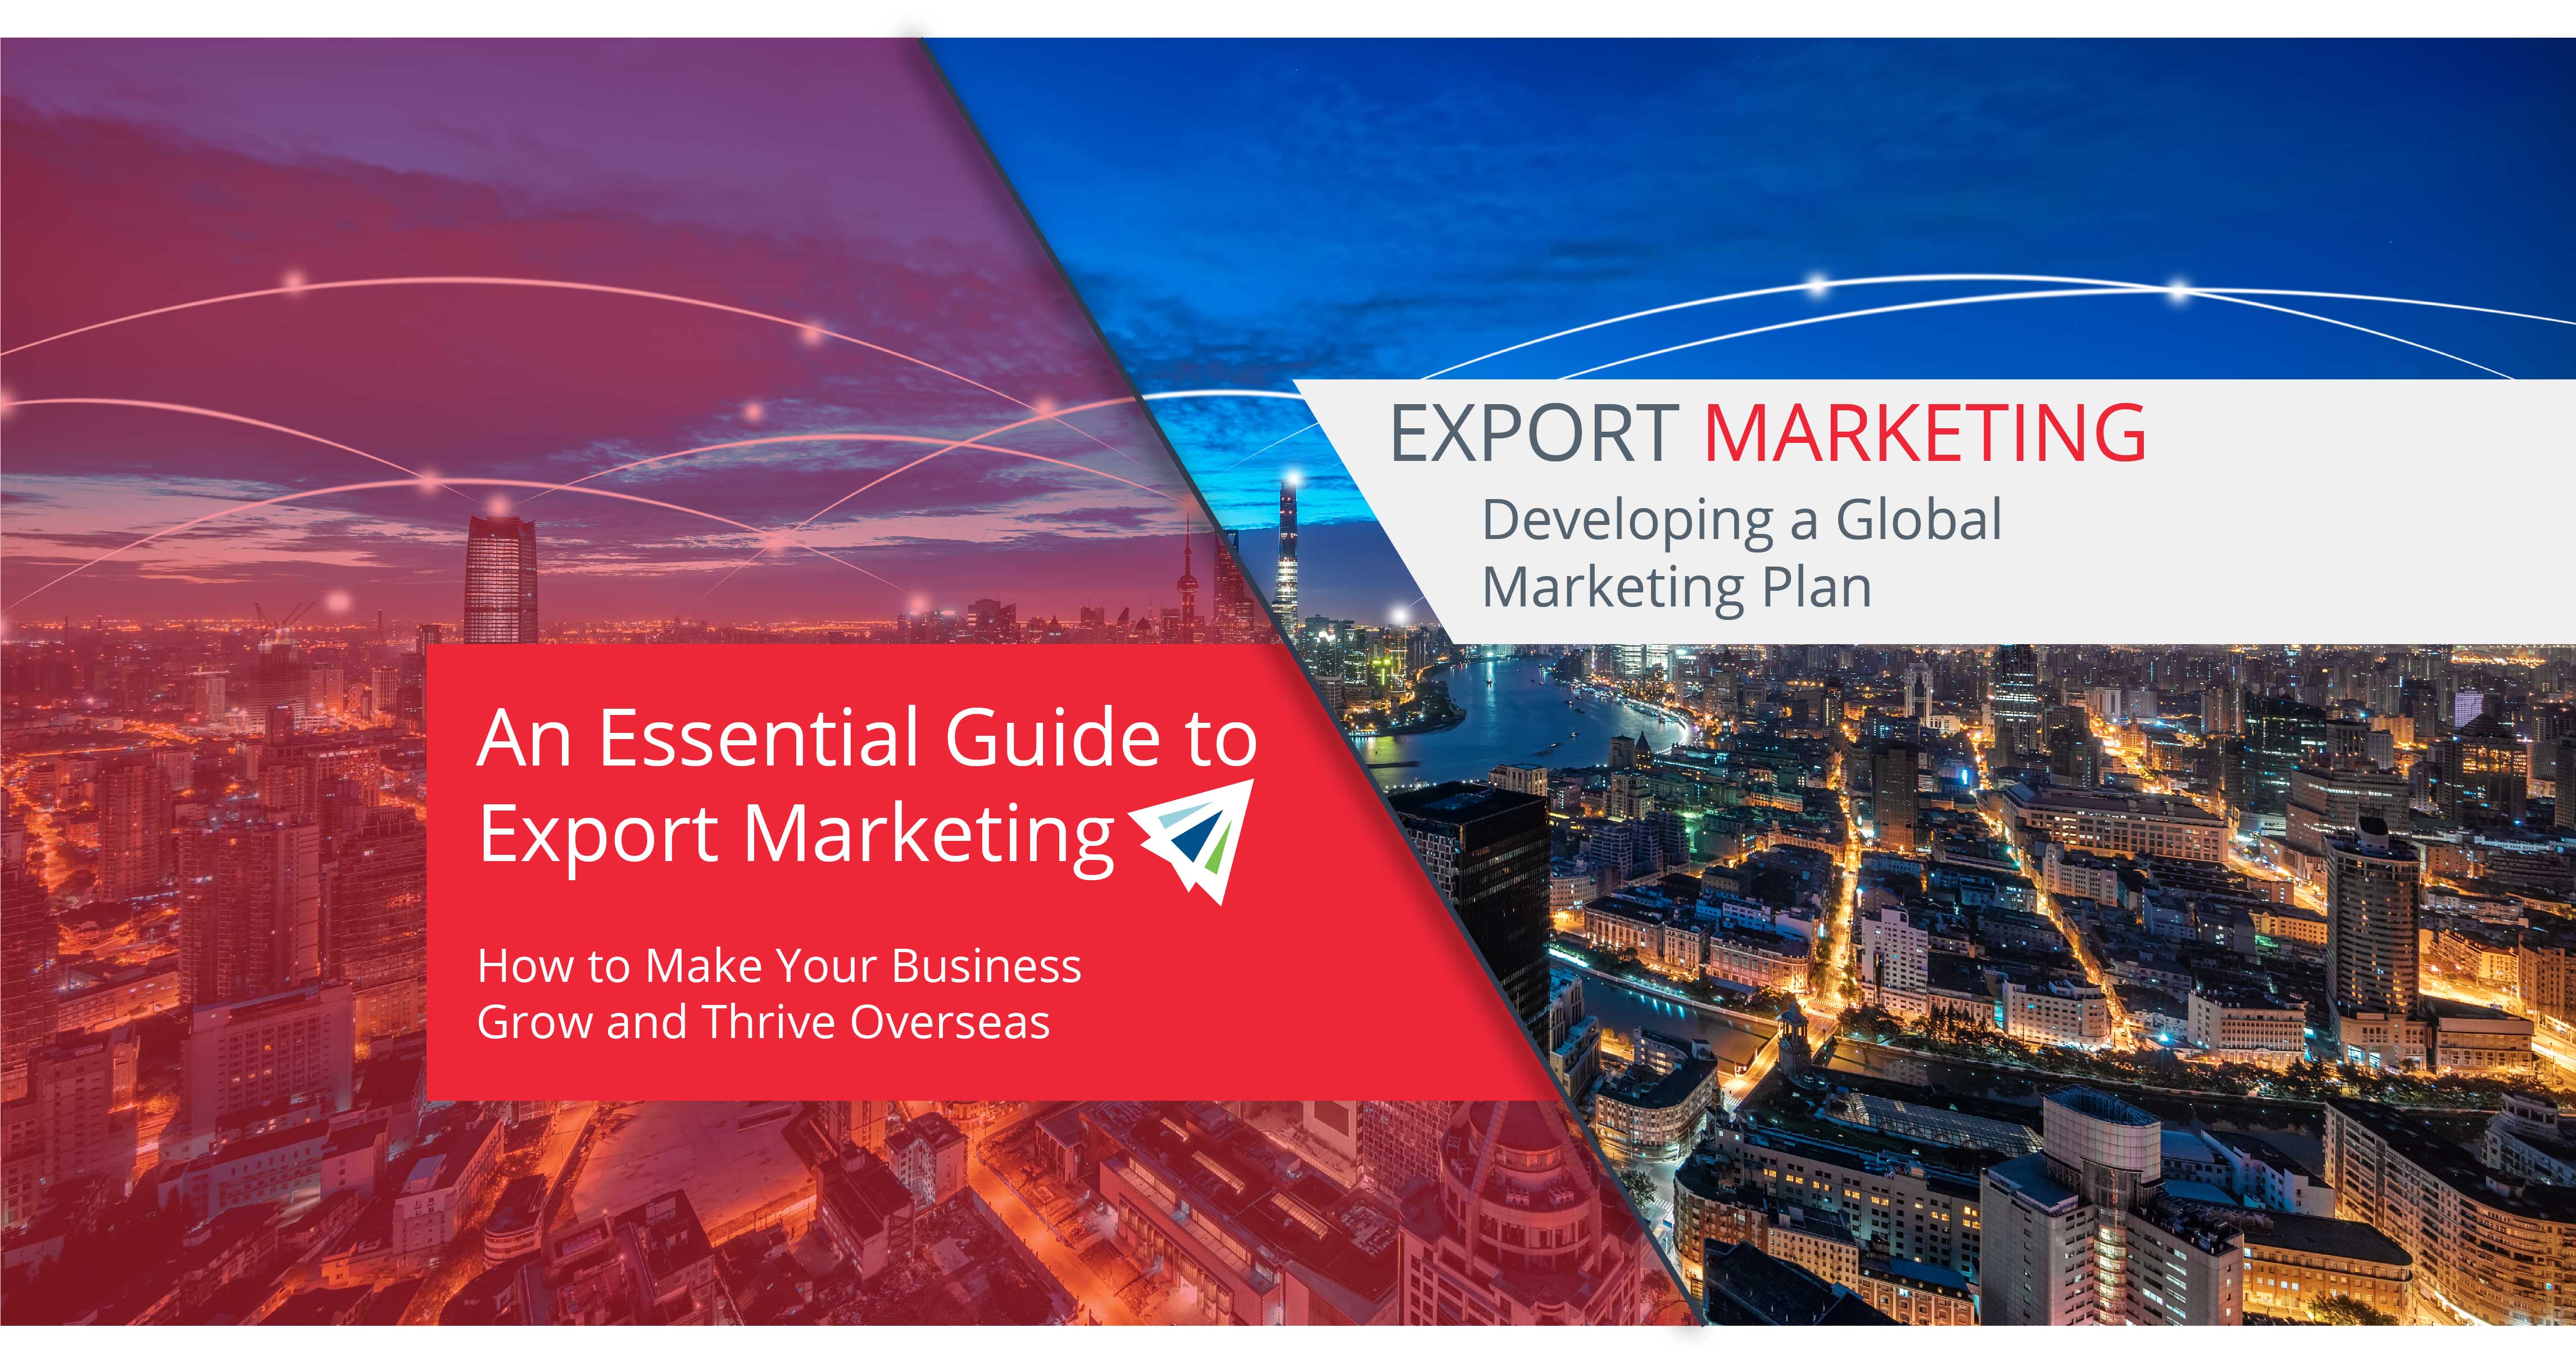 Developing an Export Marketing Plan